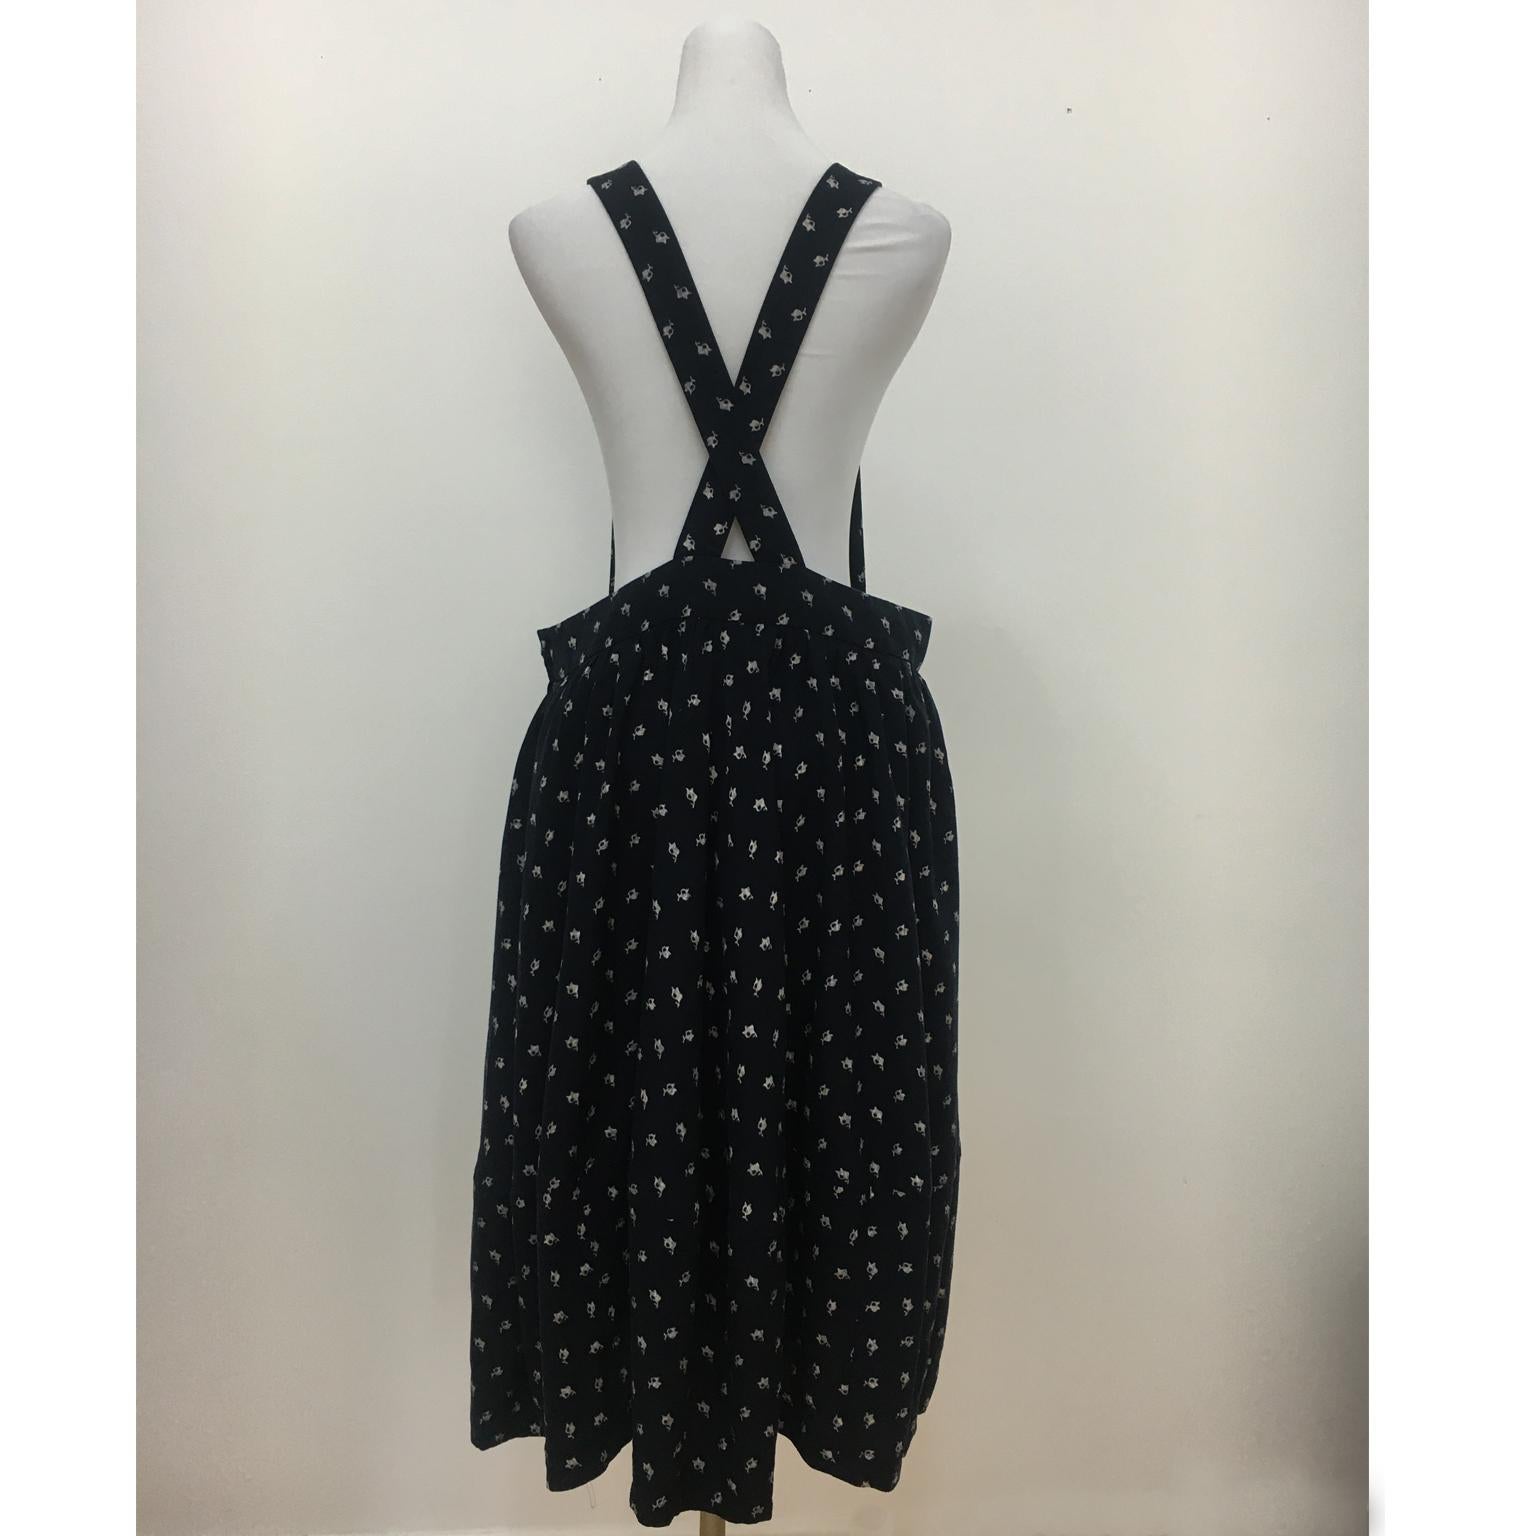 Black Comme des Garcons Salopette Overall Skirt Dress AD 2013  For Sale